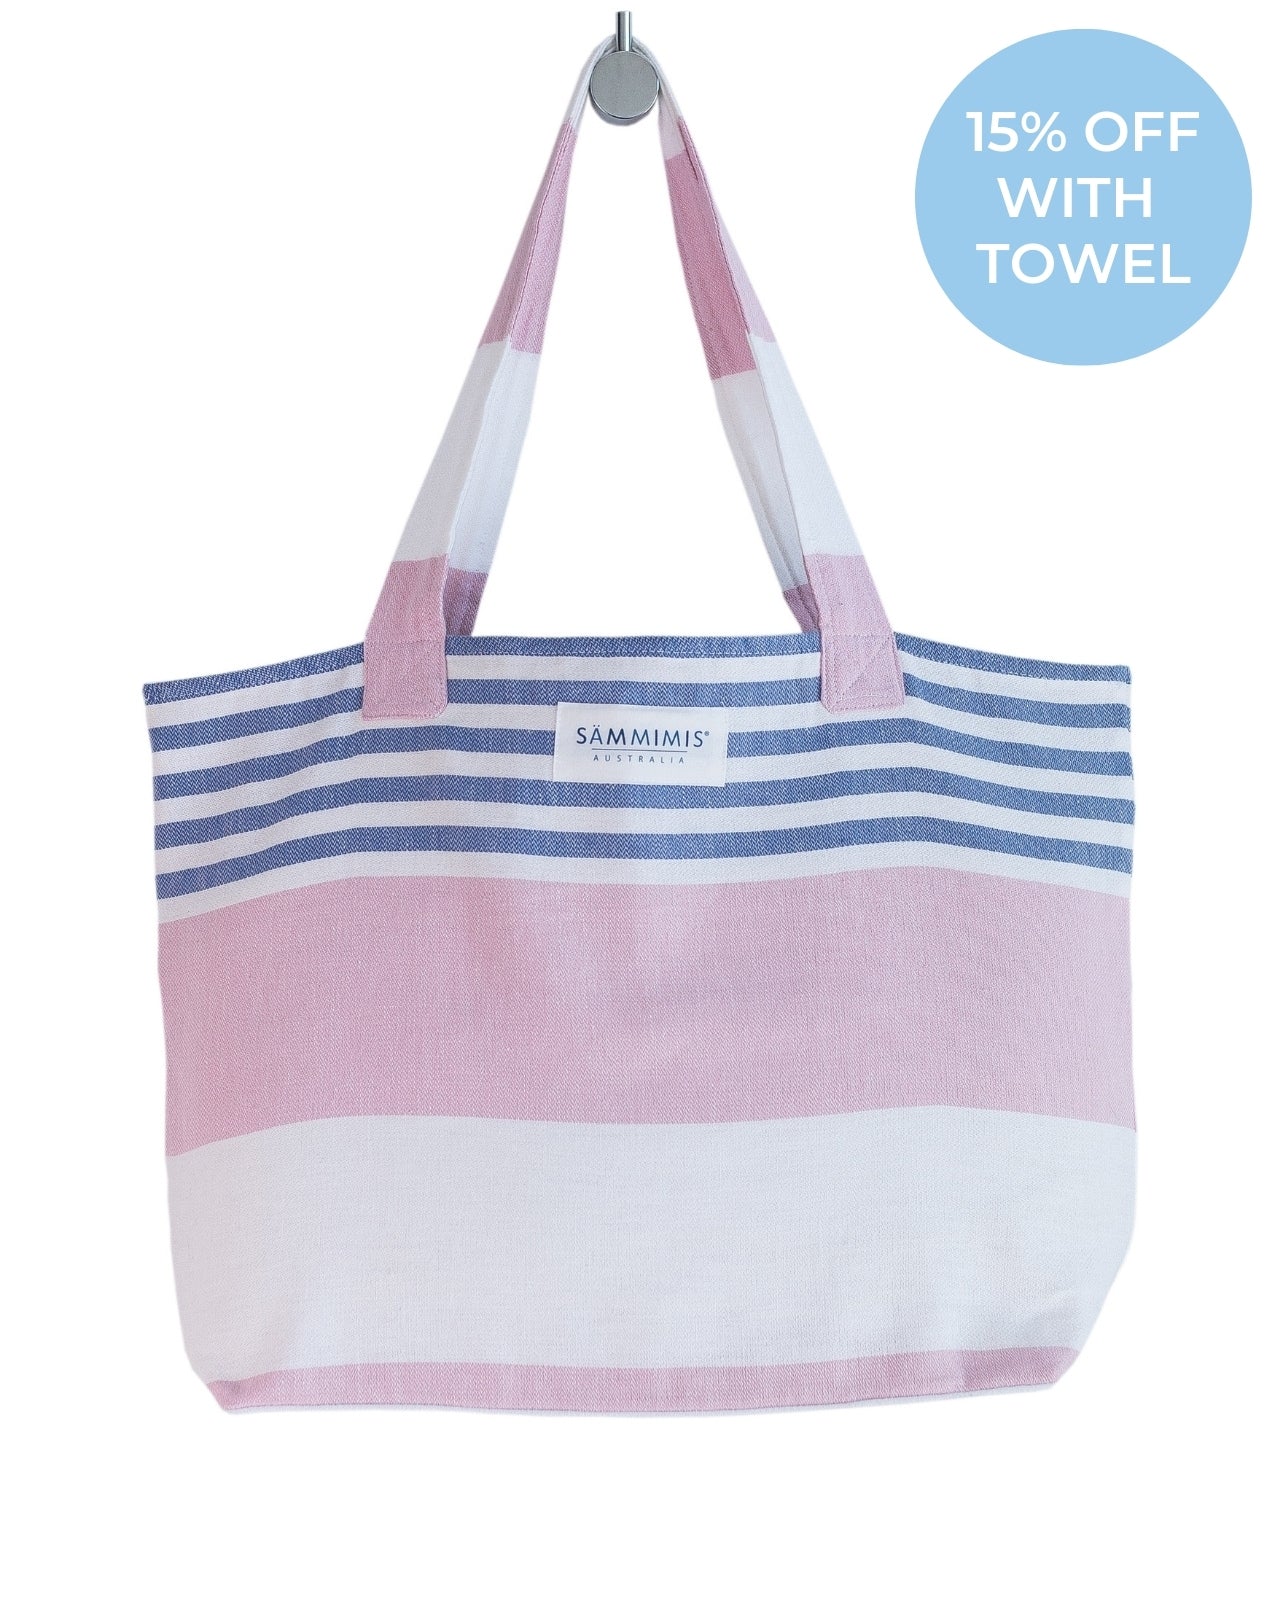 ST TROPEZ Beach Bag: Pink/Denim Blue